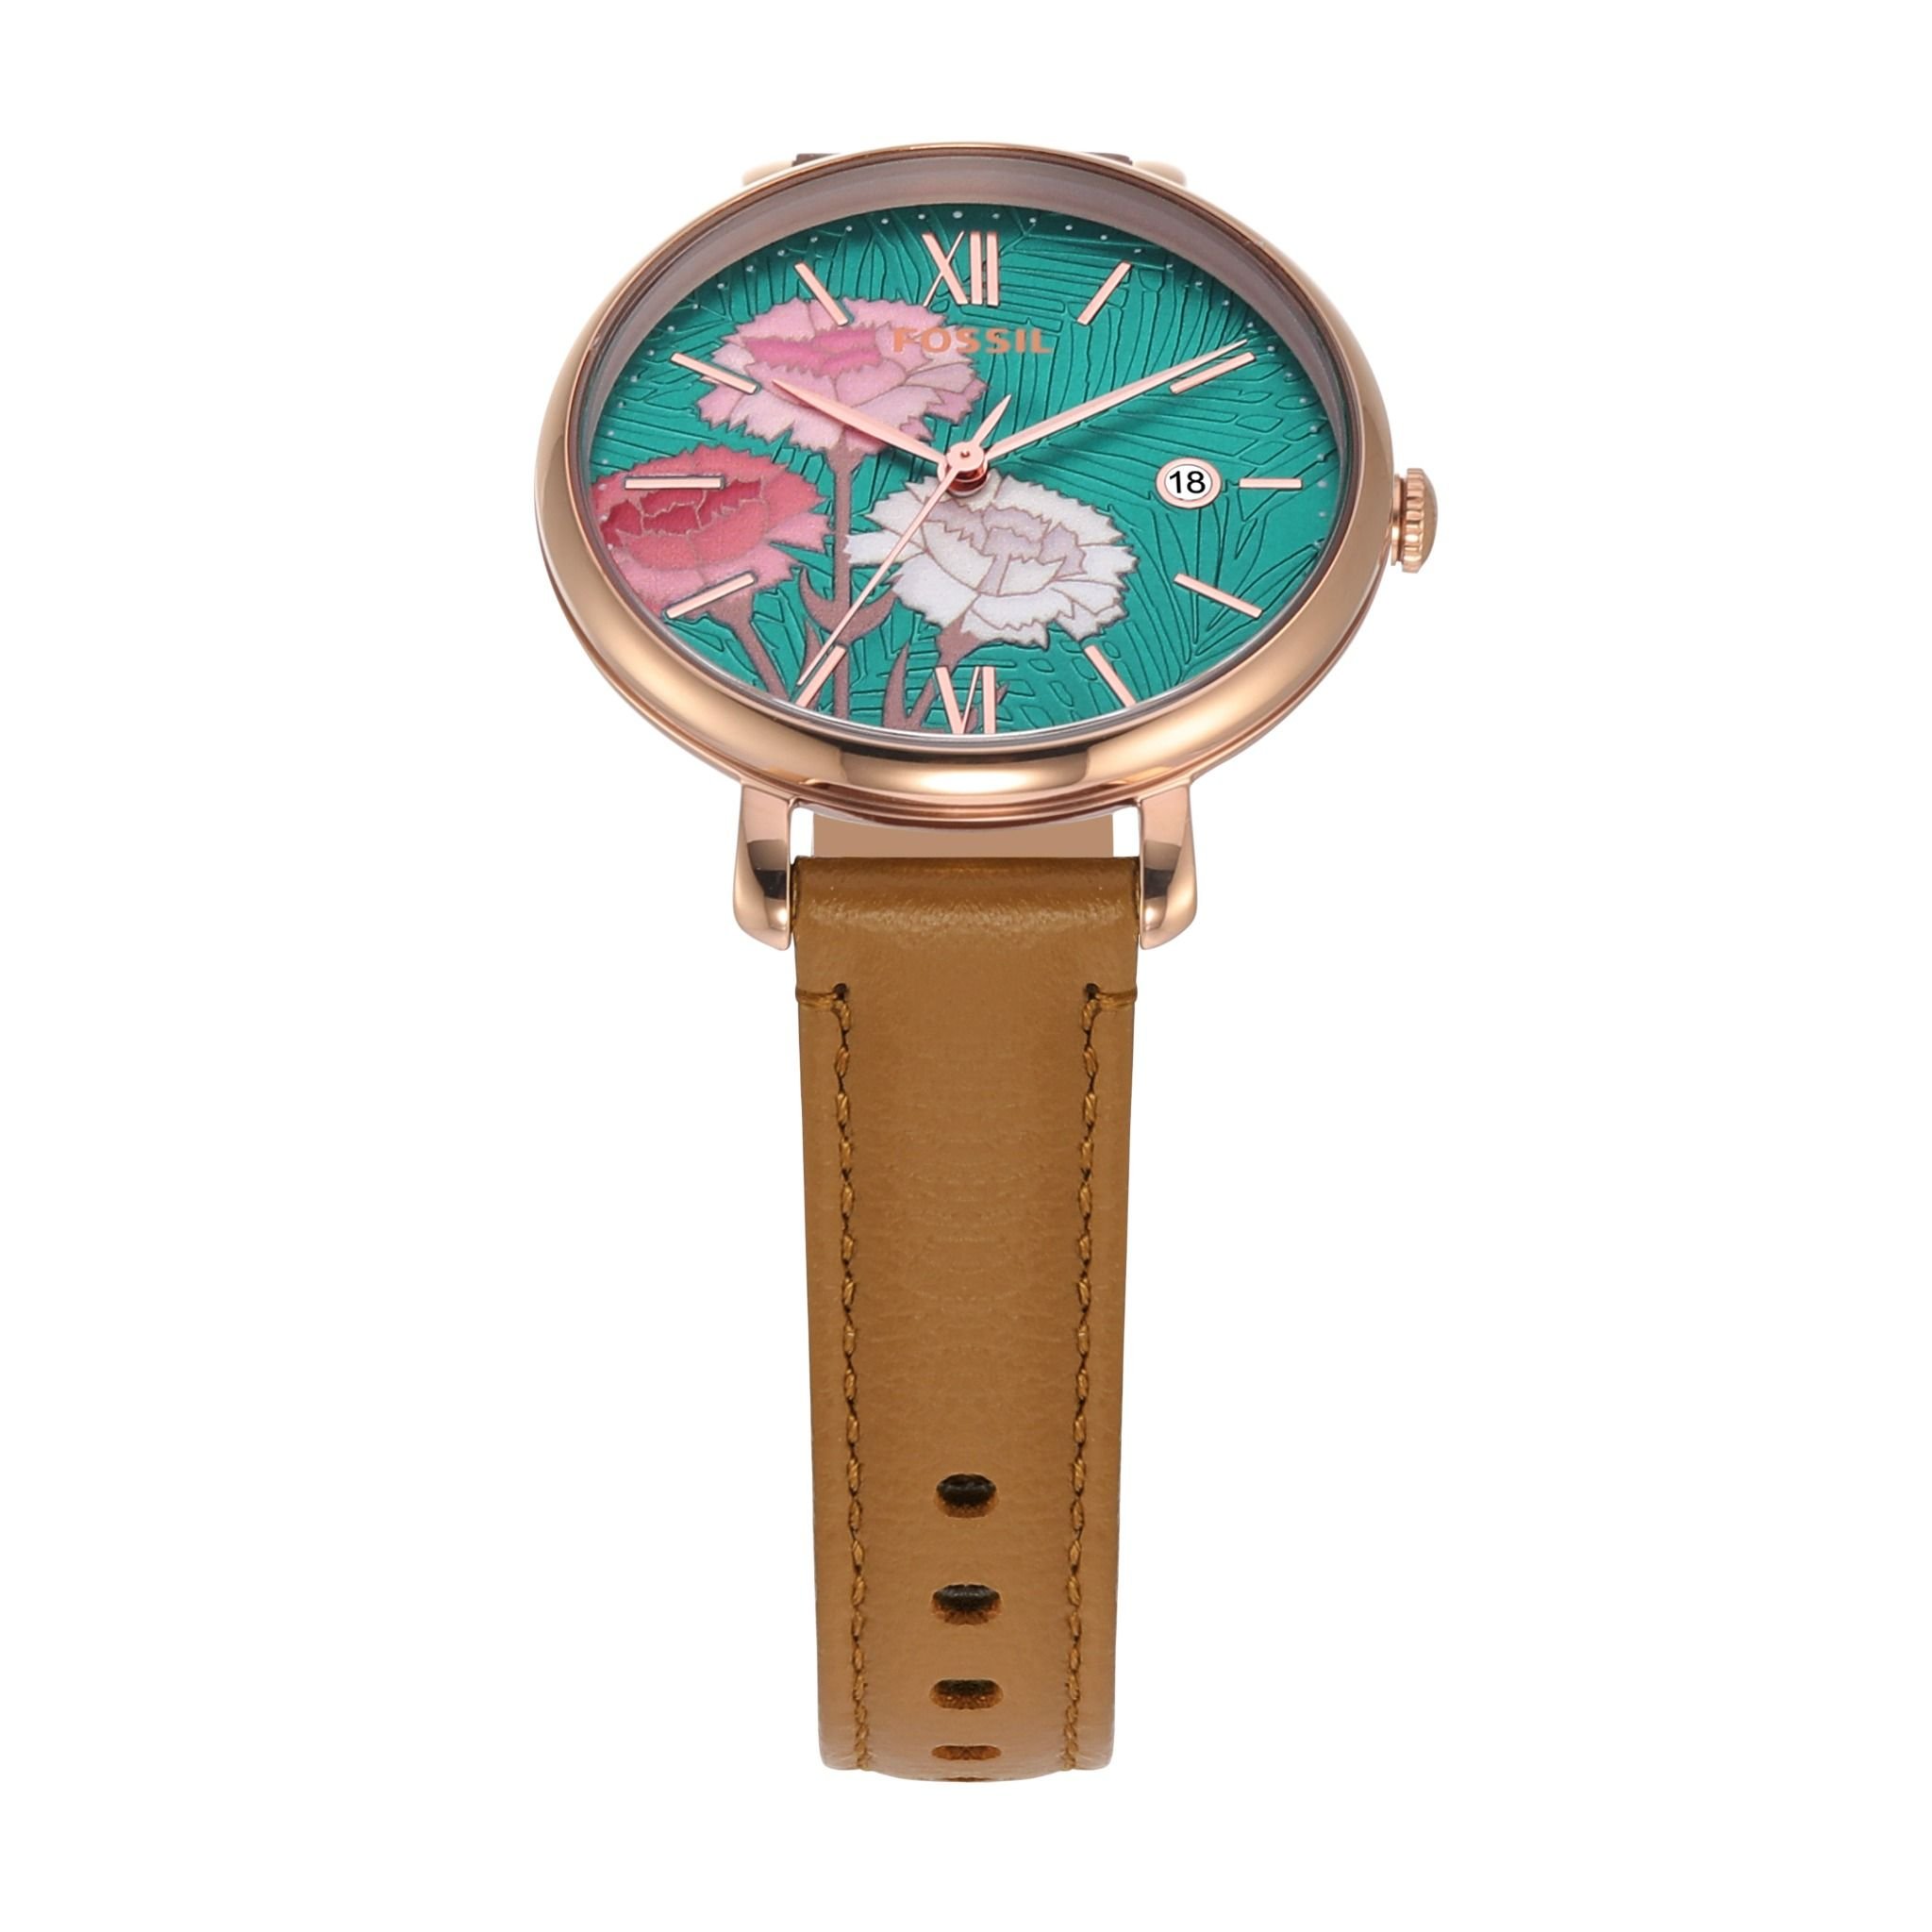  Đồng hồ nữ Fossil JACQUELINE dây da ES5274 - màu nâu 